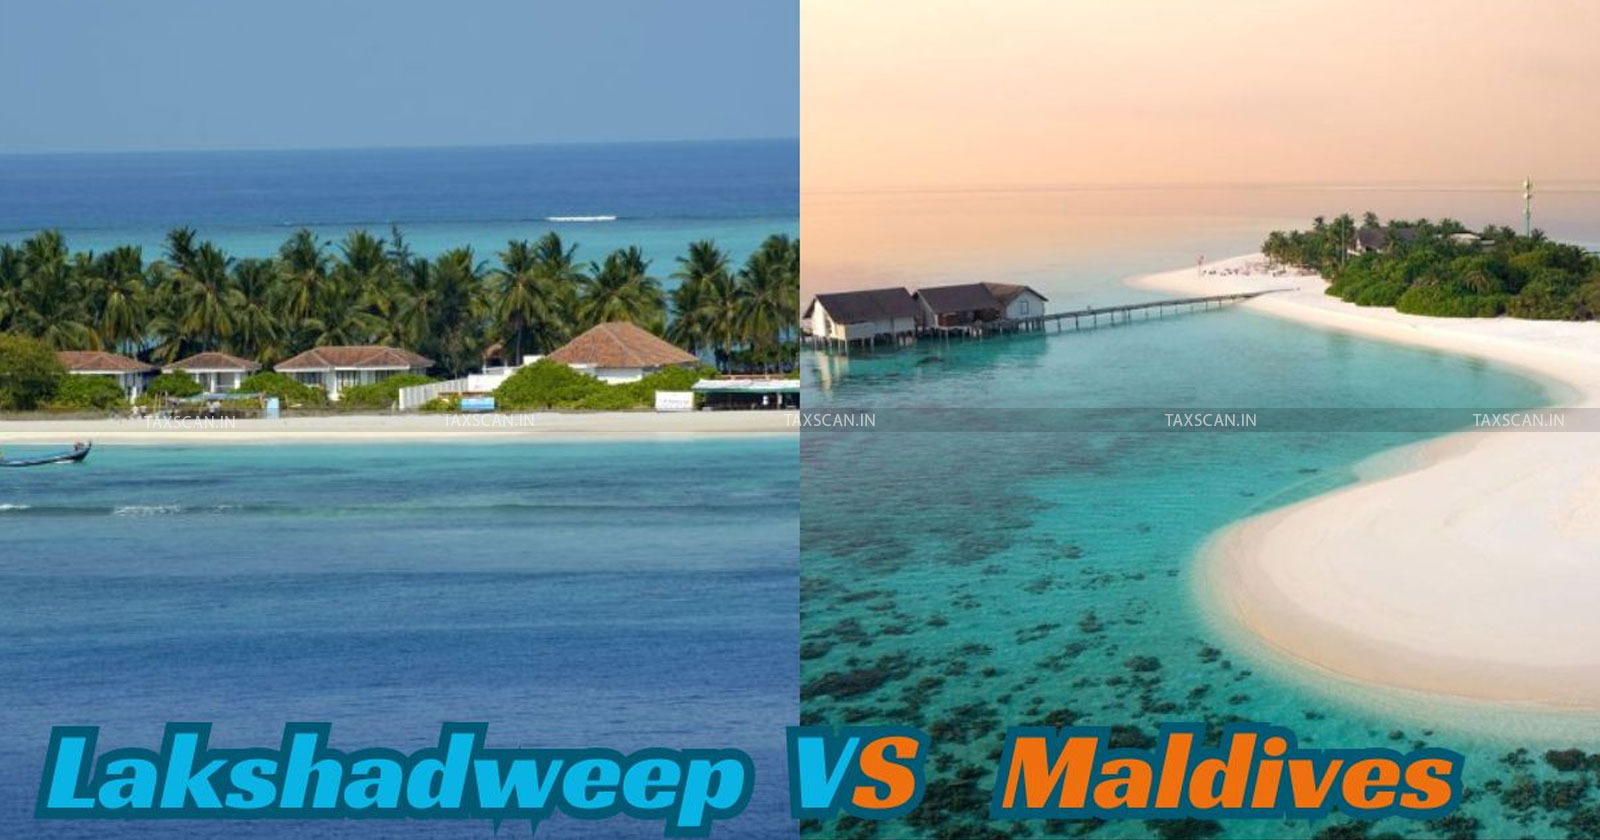 lakshadeep travel budget - budget trip to lakshadeep - Maldives vs. Lakshadweep travel cost - GST comparison for Maldives and Lakshadweep trips - Taxscan